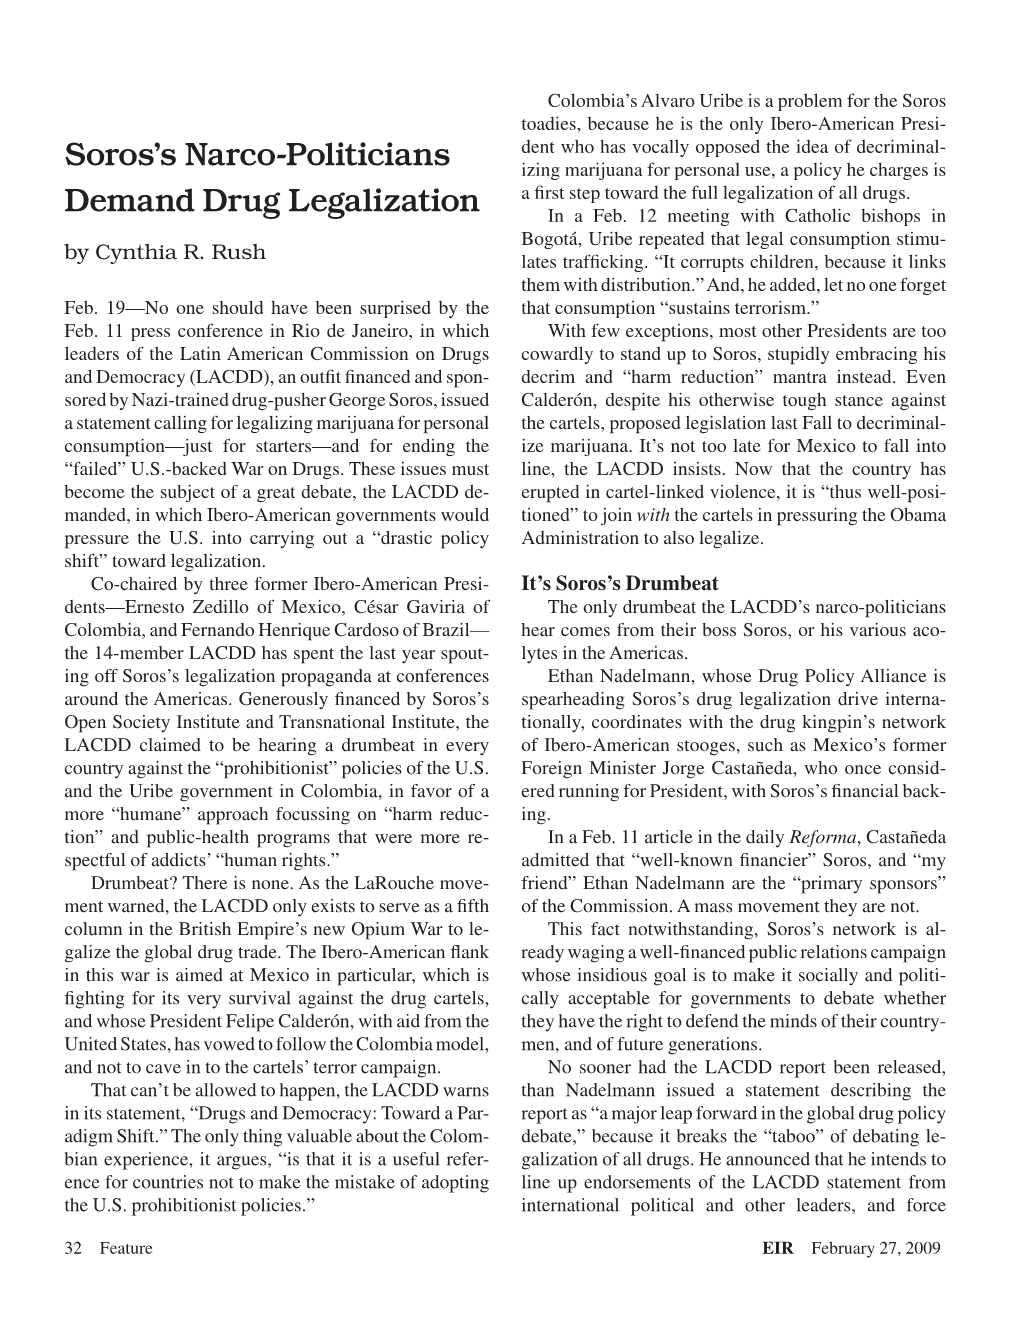 Soros's Narco-Politicians Demand Drug Legalization